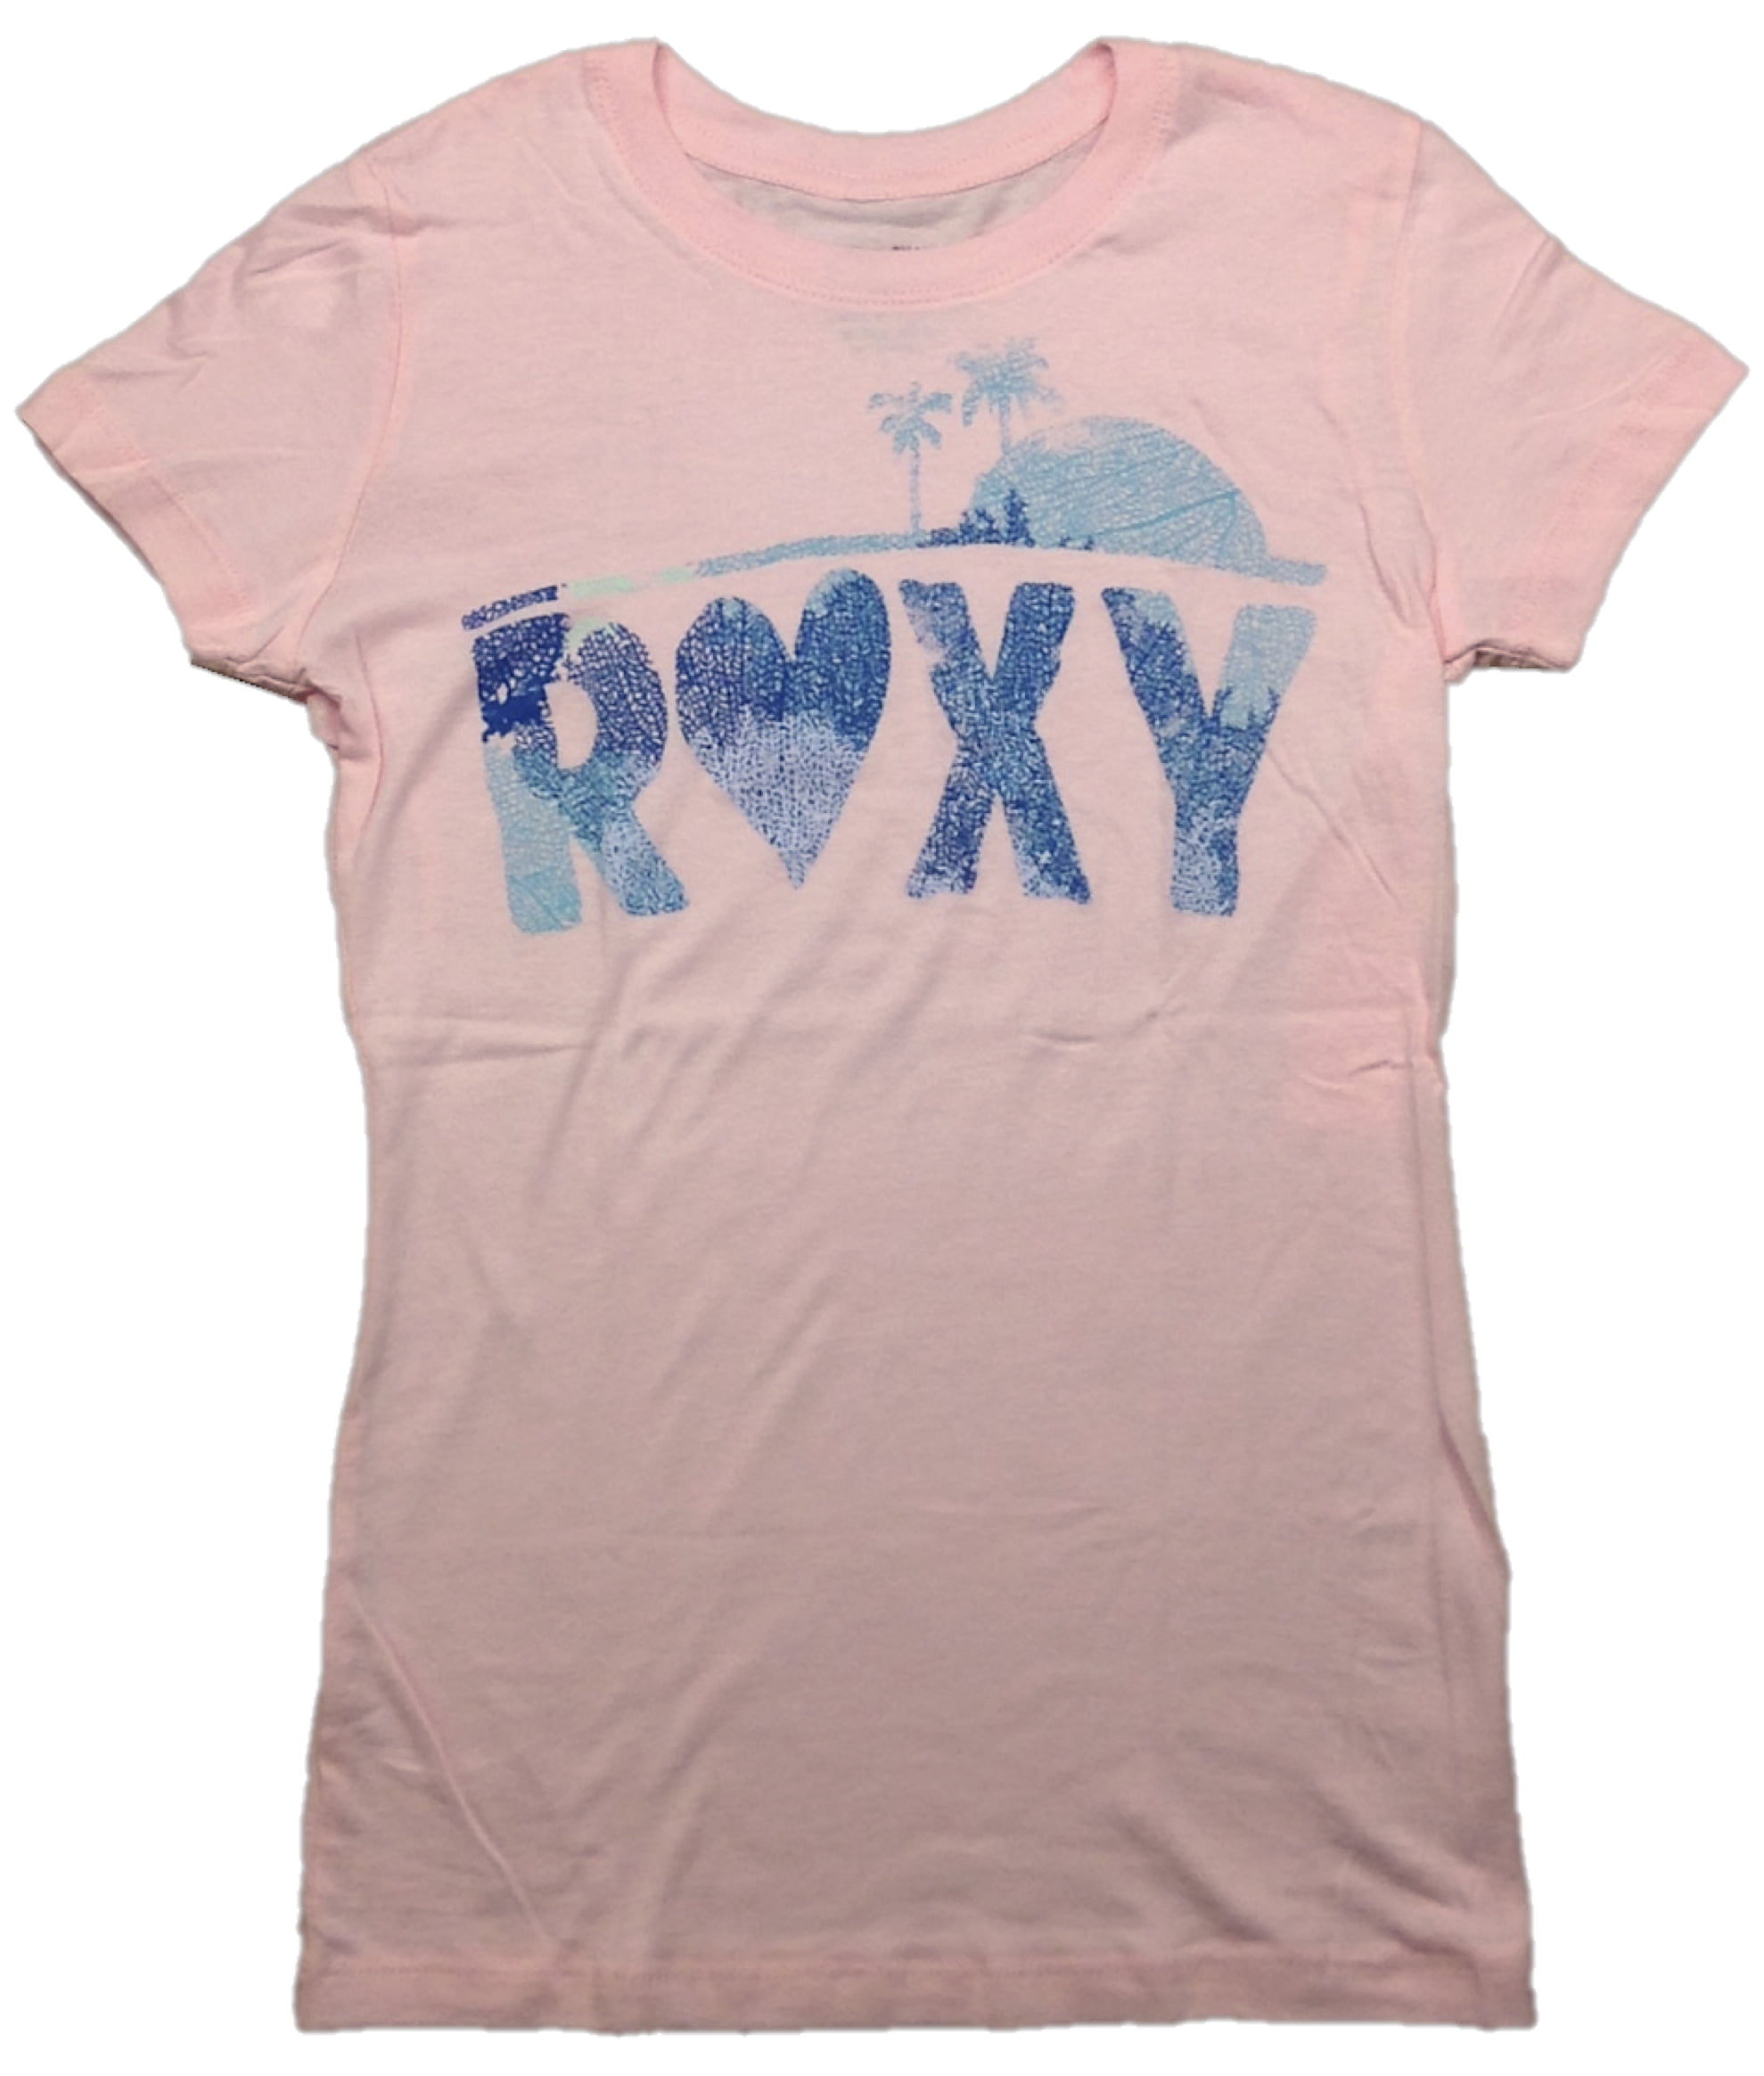 Roxy Roxy Womens T Shirt Graphic Logo